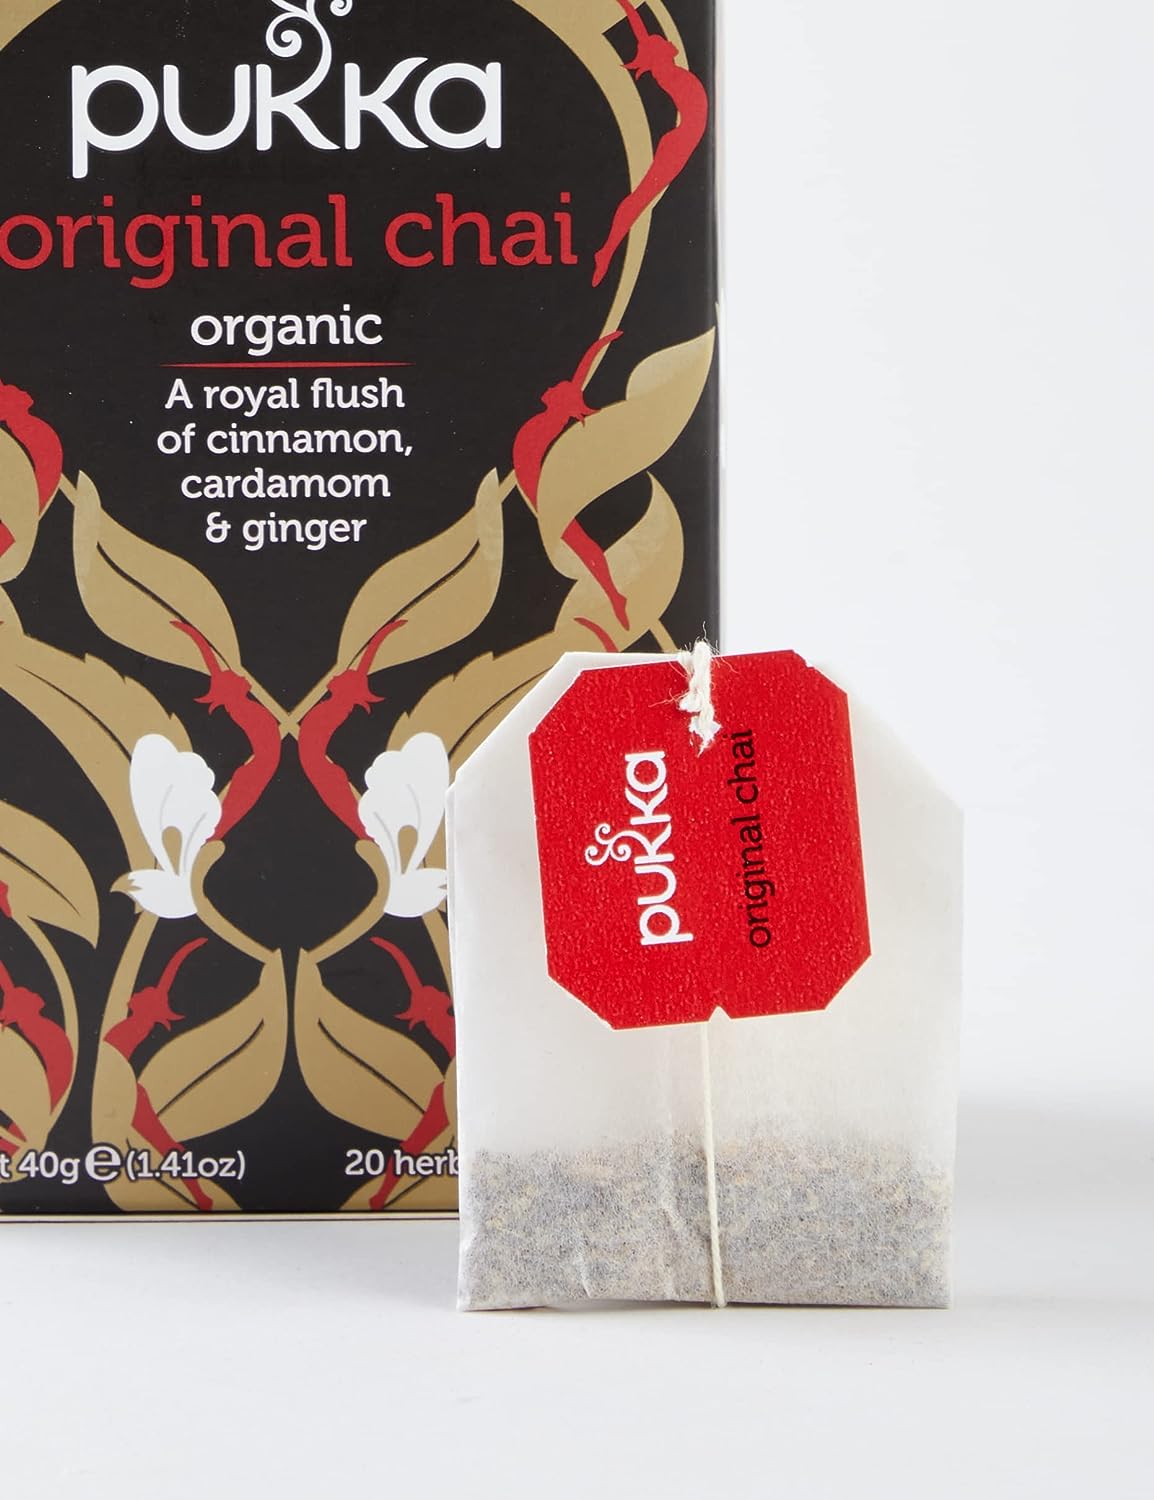 Pukka Tea Original Chai Envelopes 20's